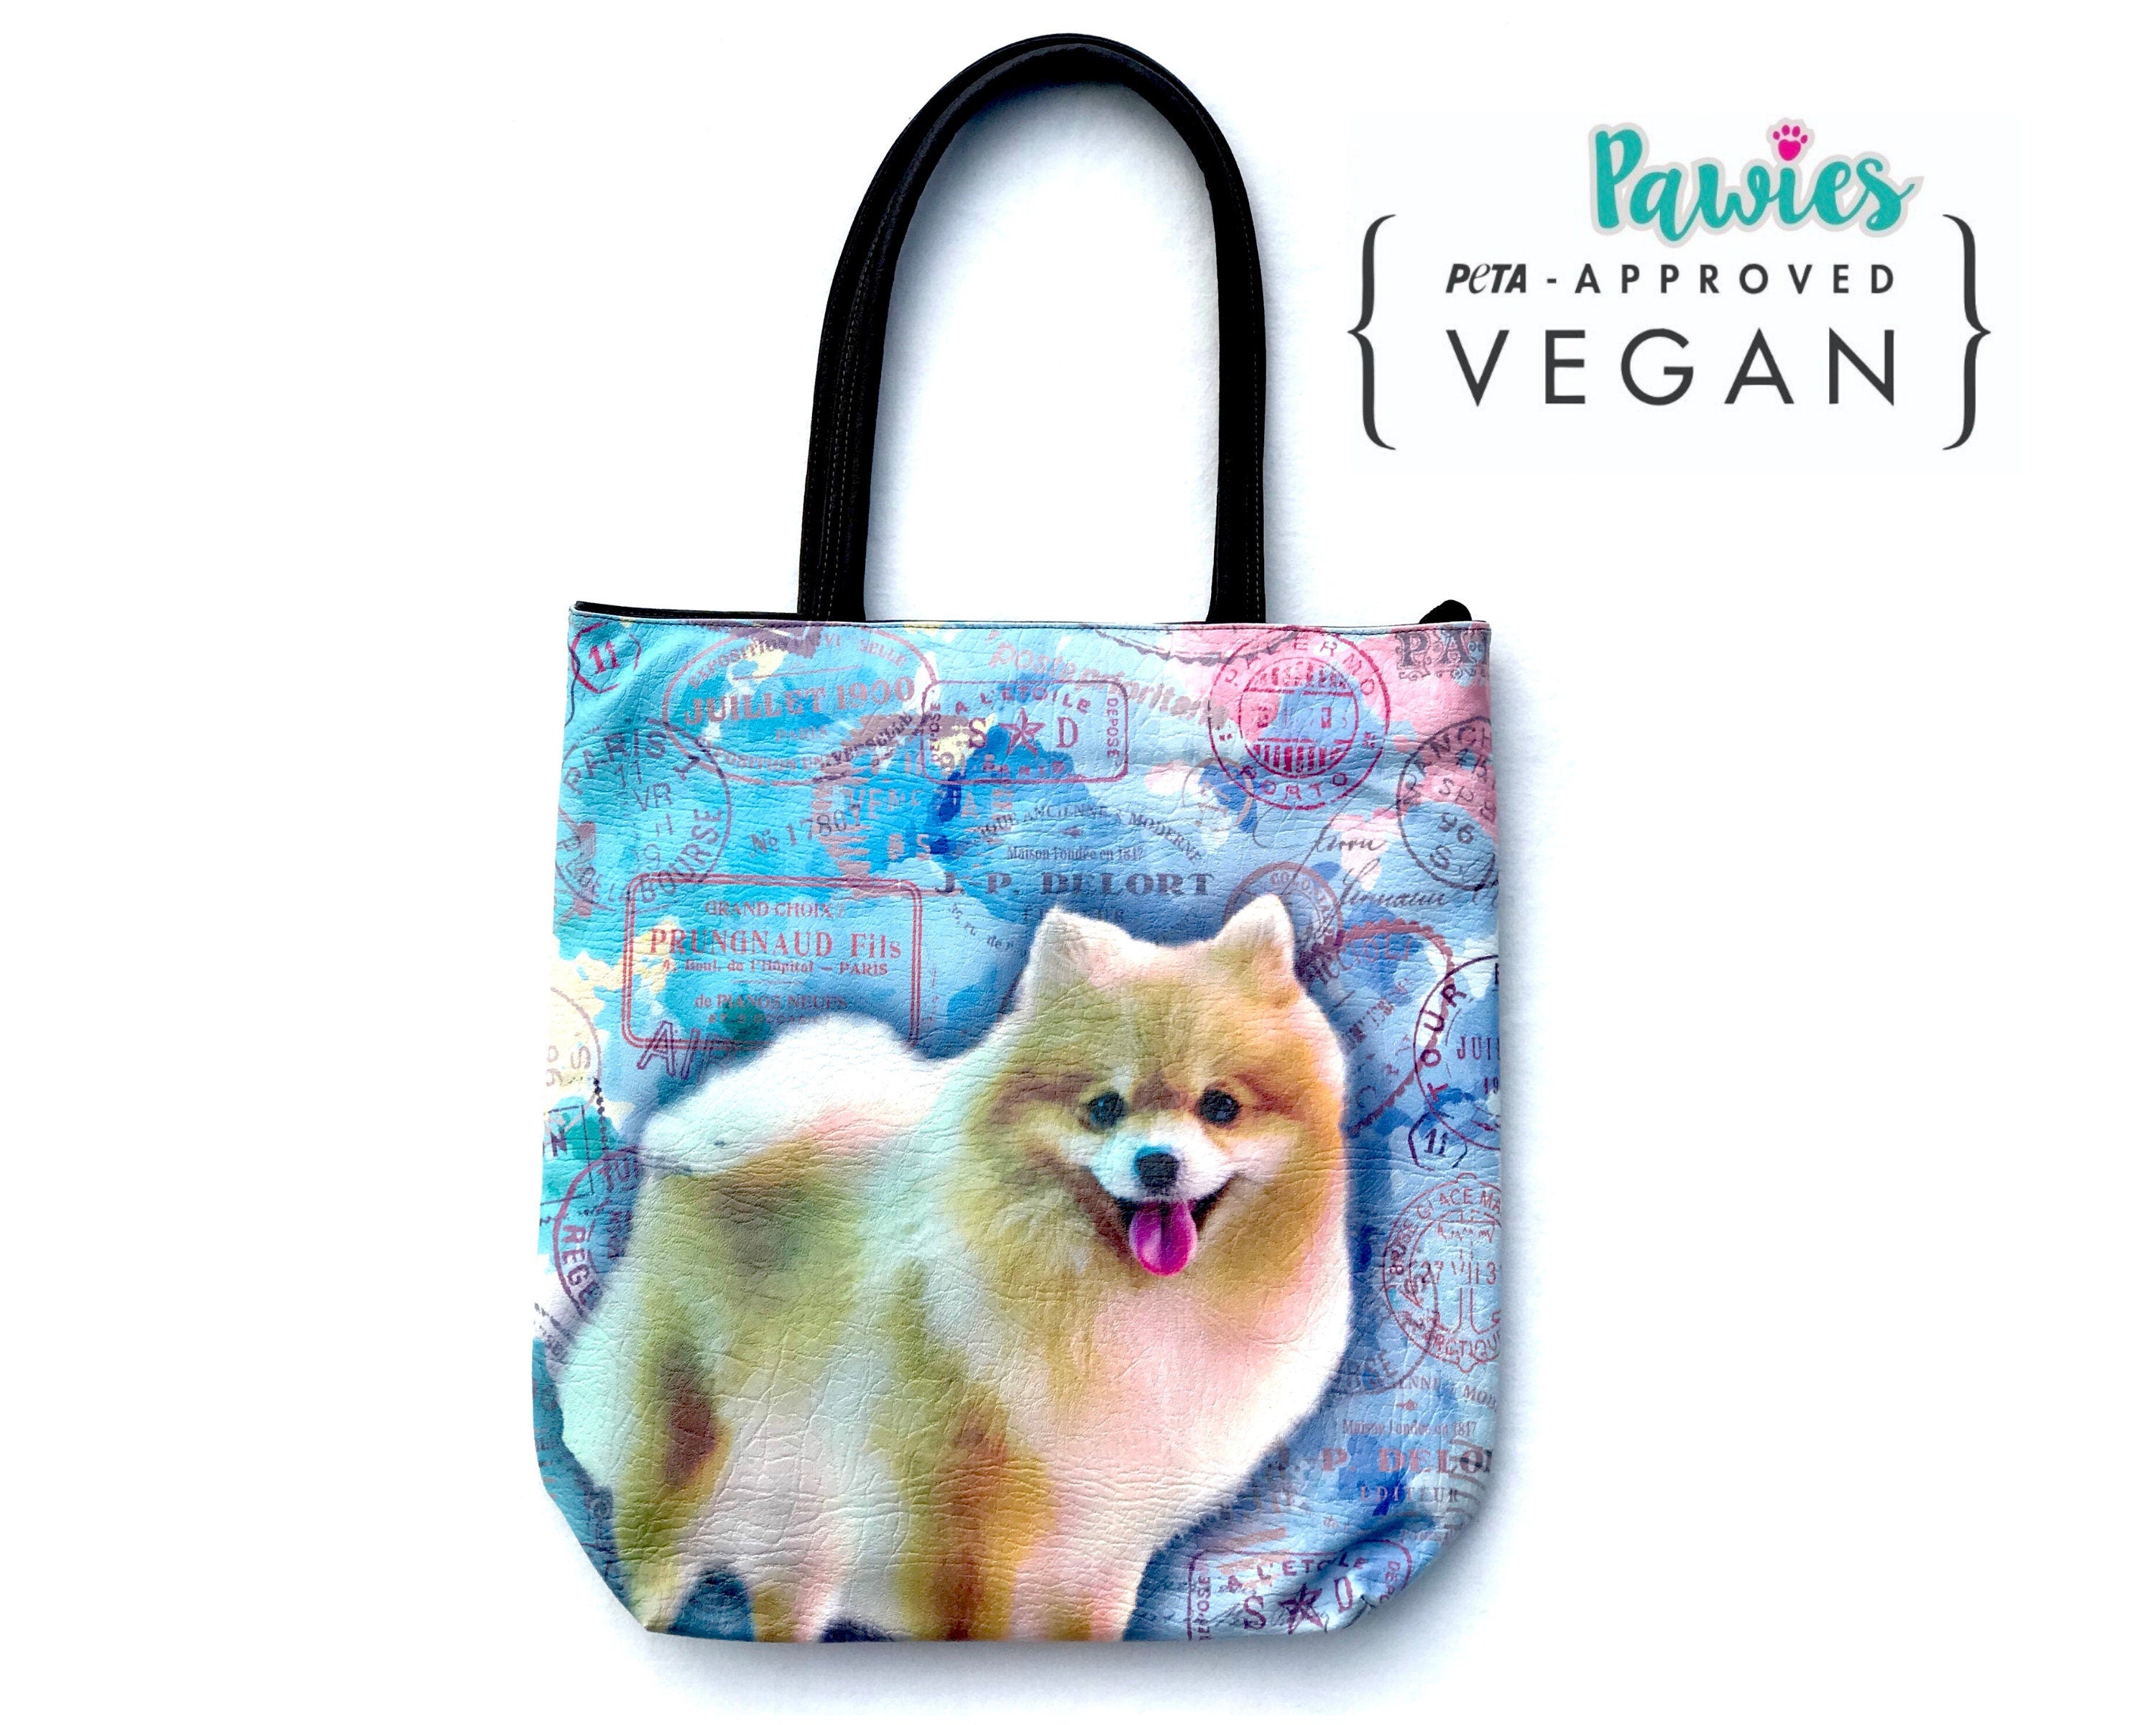 Pomeranian Vegan Leather Tote bag, tote bag, animal lovers, dog lover, pawies, vegan leather, Pomeranian, handbag